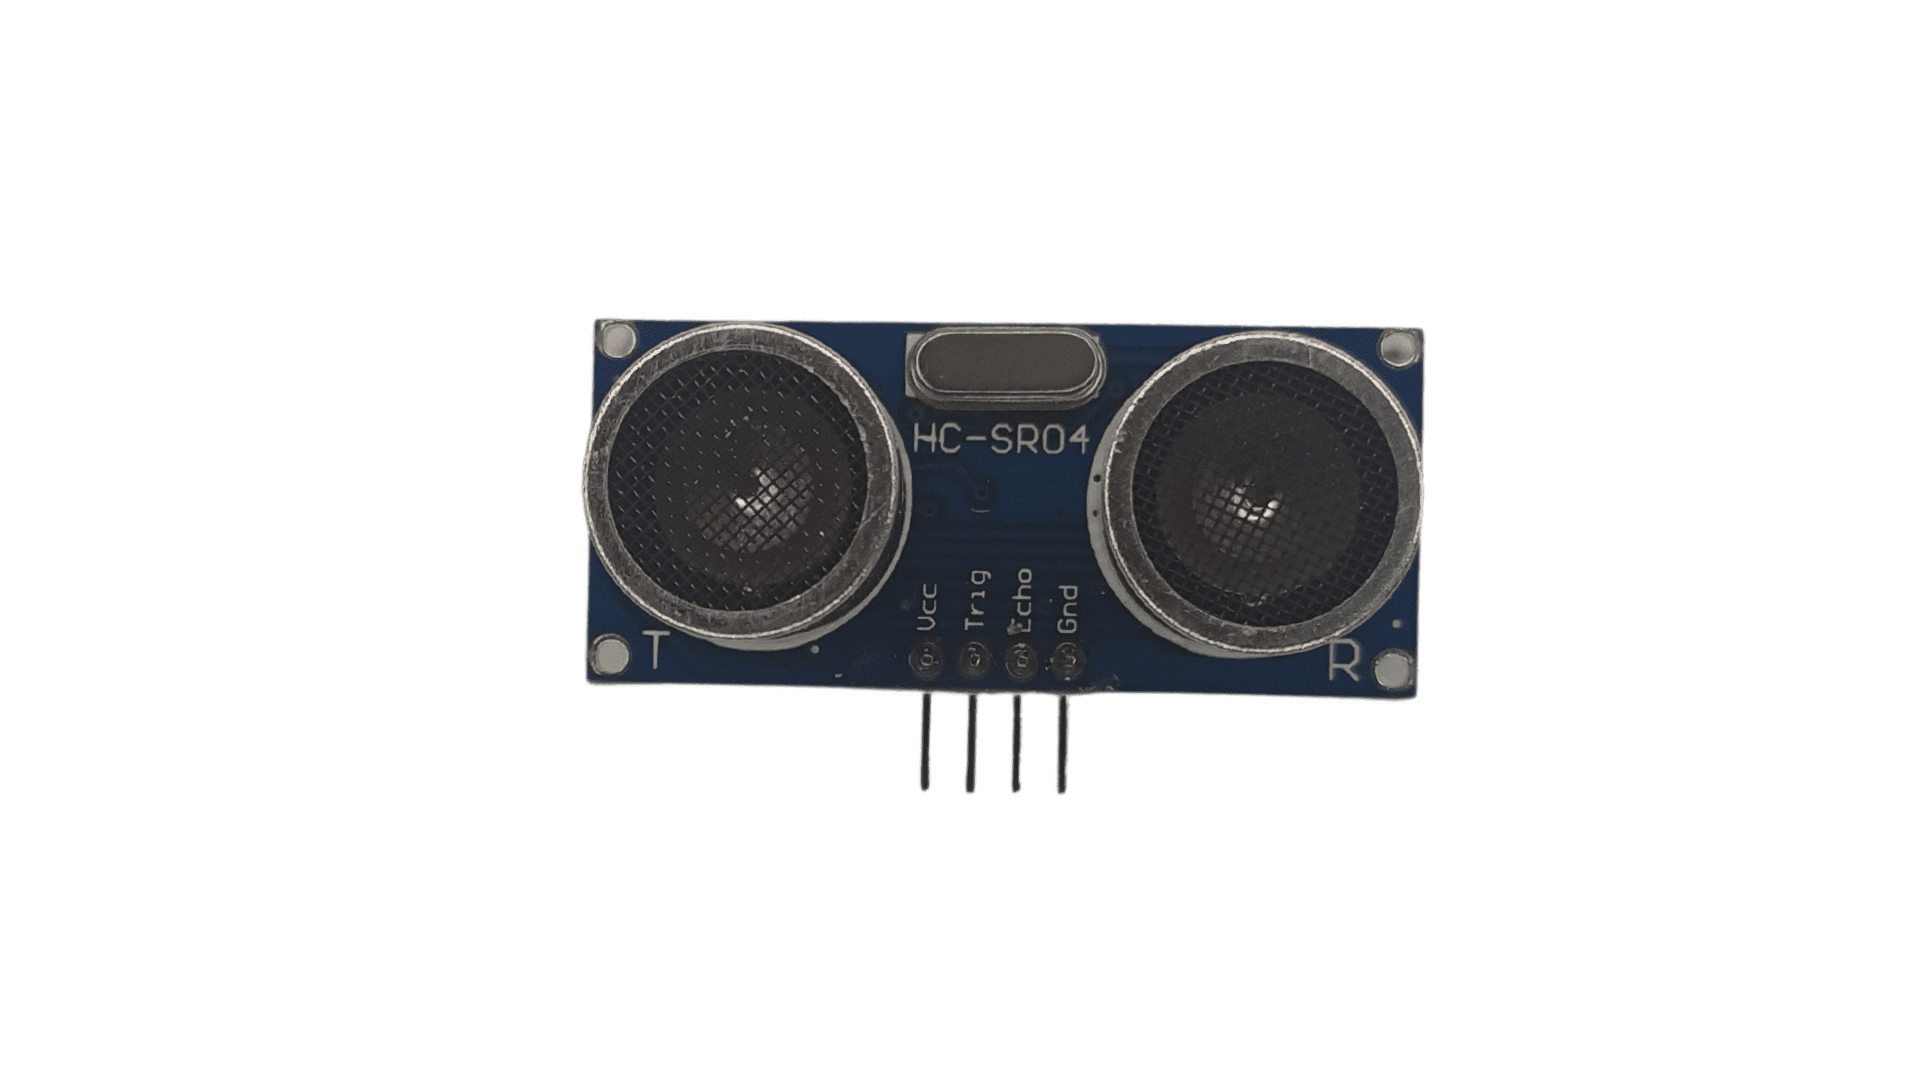 Ultrasonic sensor for Arduino projects